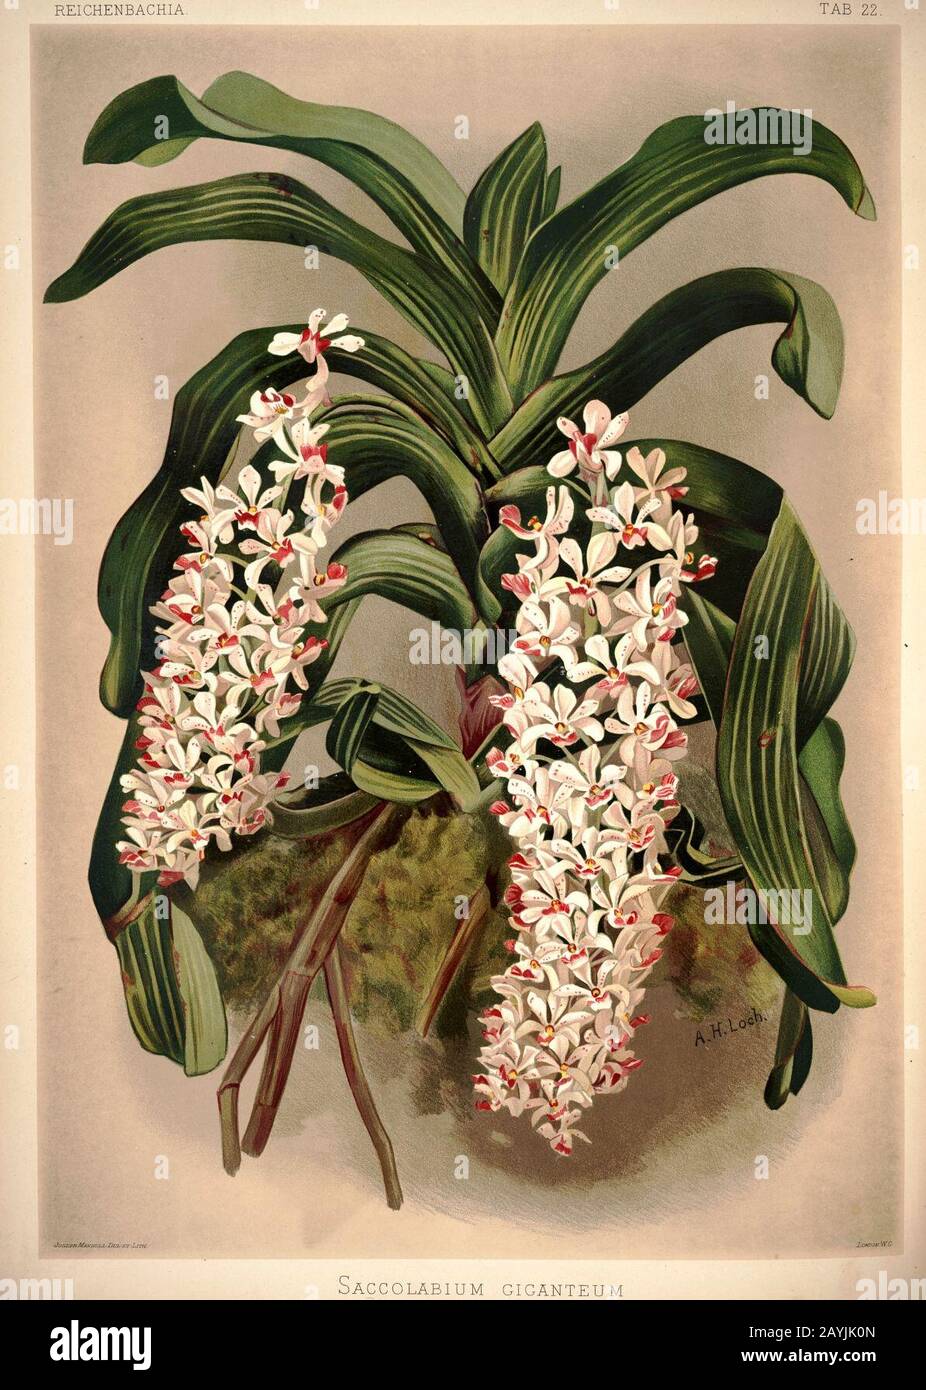 Frederick Sander - Reichenbachia I plate 22 (1888) - Saccolabium giganteum. Stock Photo